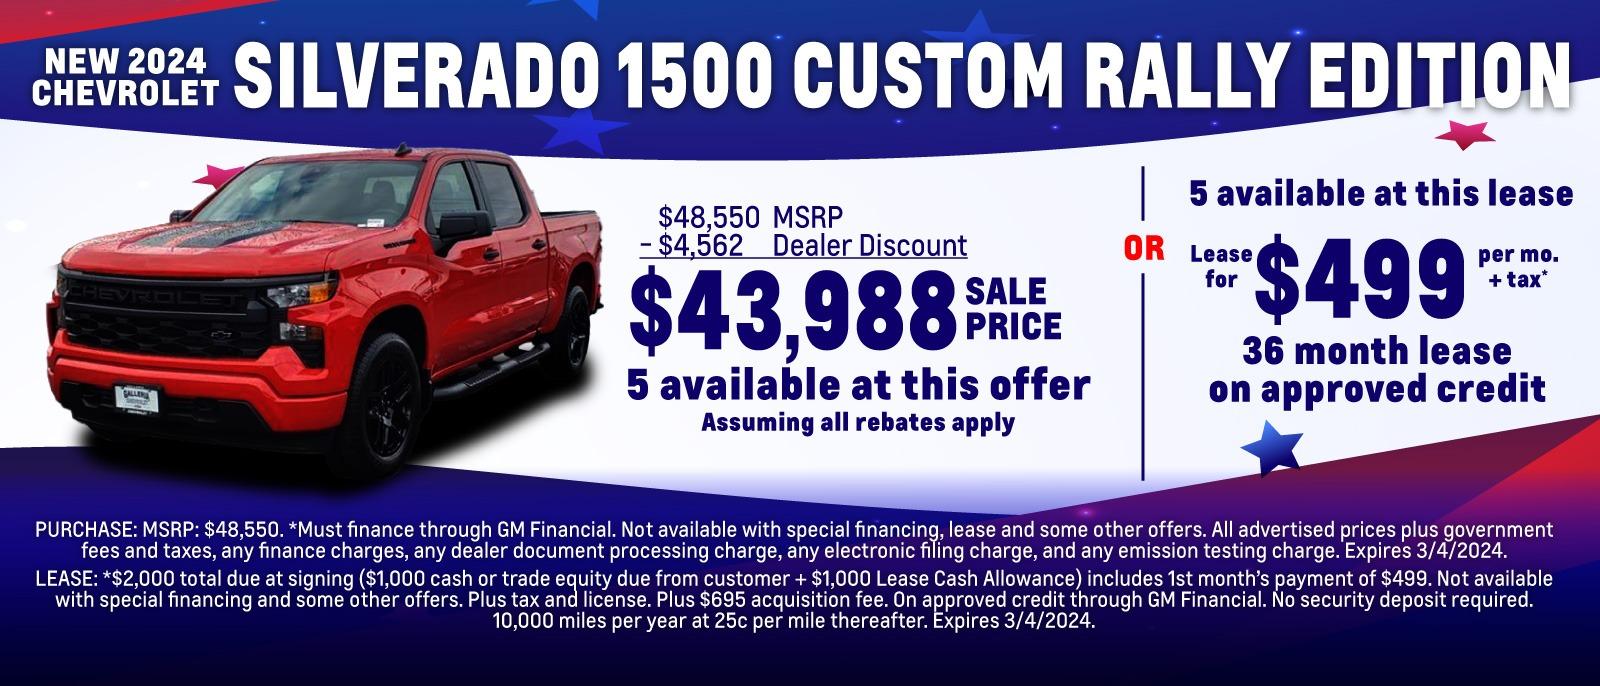 2024 Chevrolet Silverado Custom Rally Edition